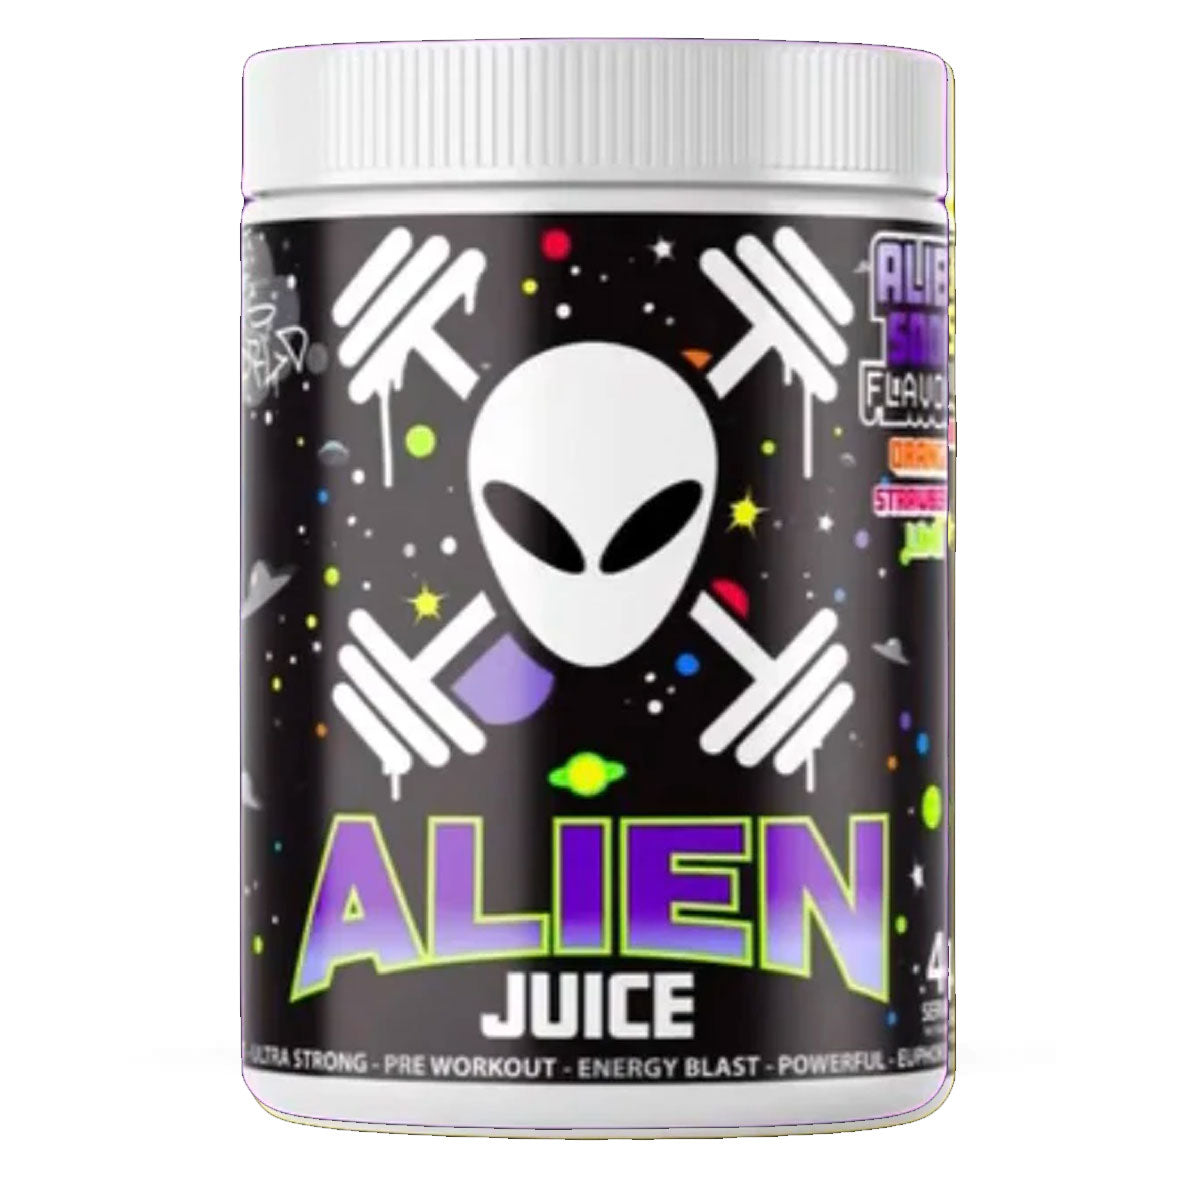 Gorilla Alpha Alien Juice